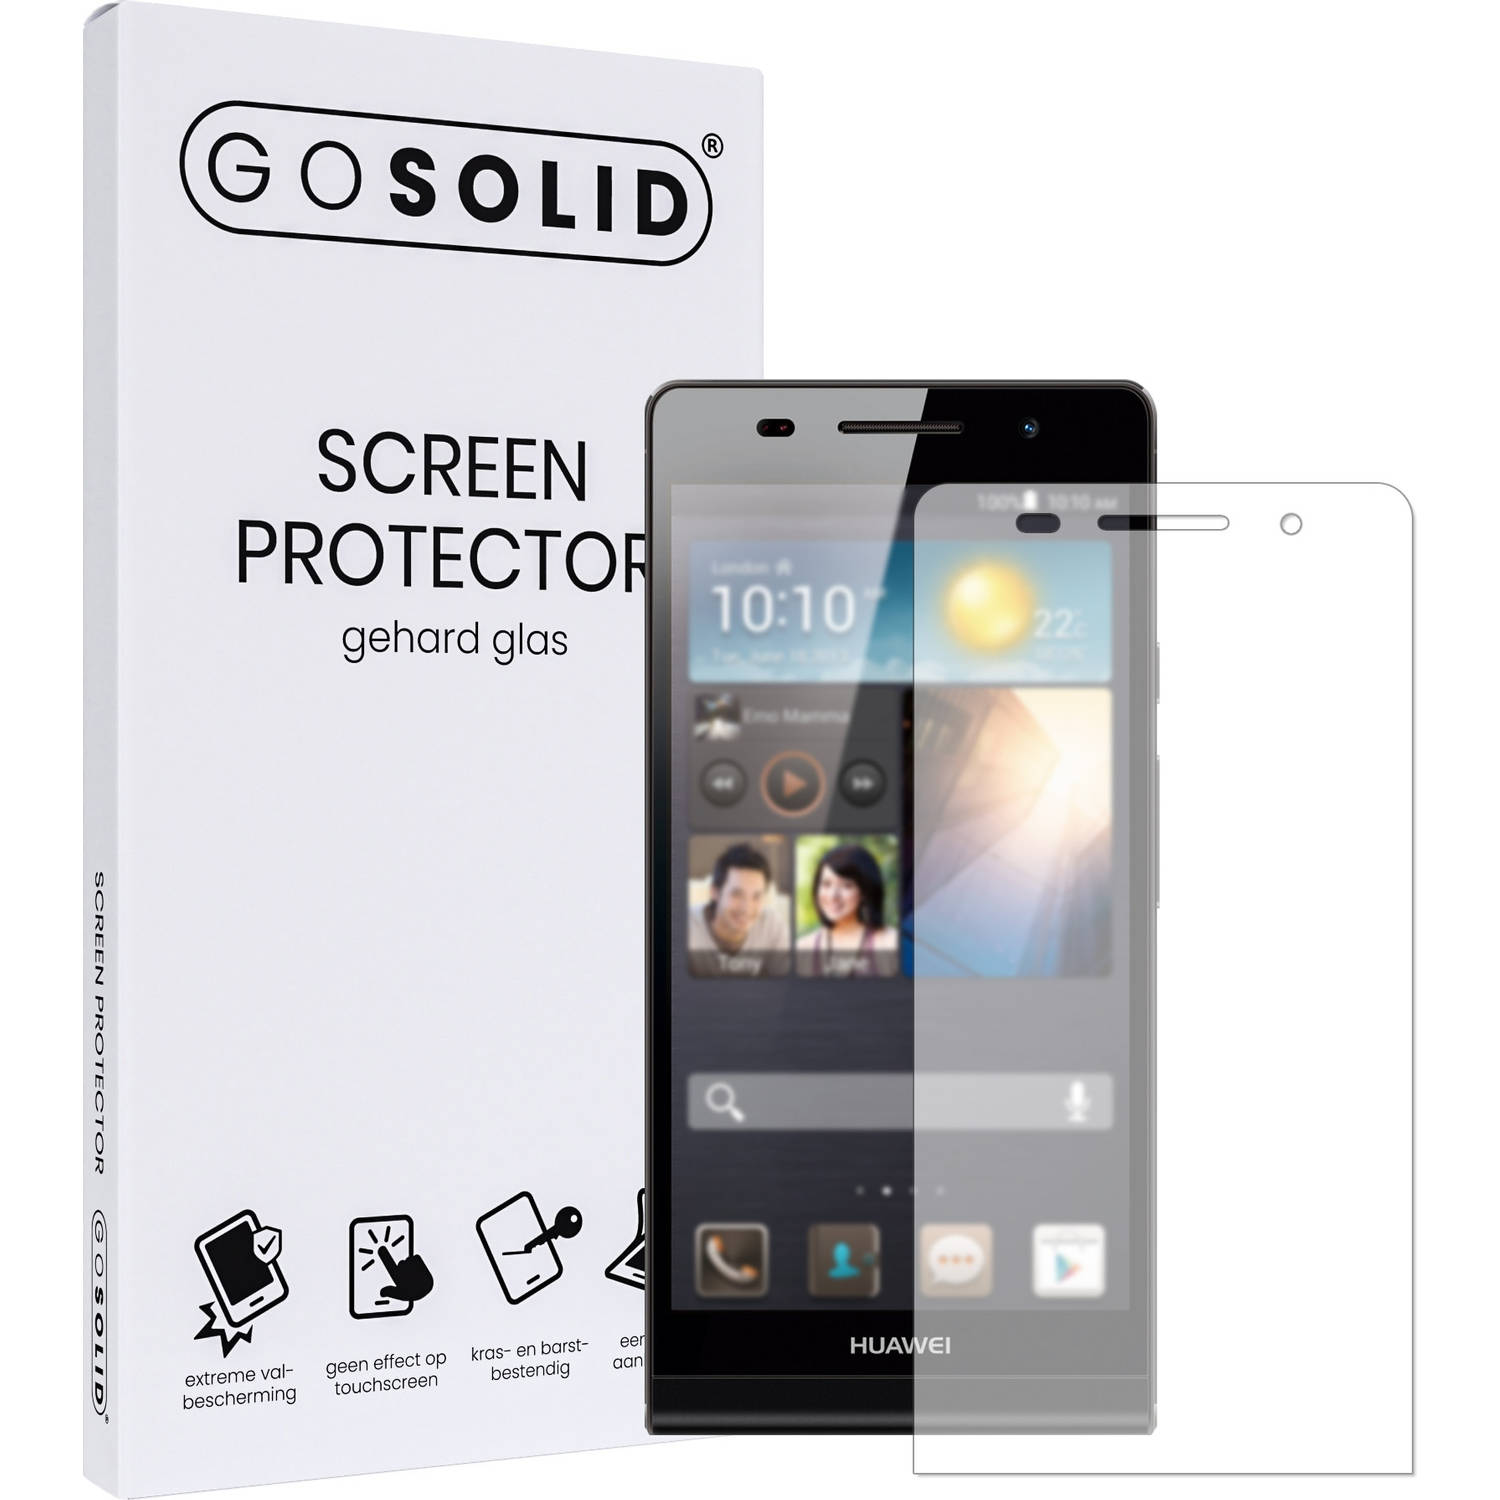 GO SOLID! screenprotector Huawei Ascend P6 - gehard glas